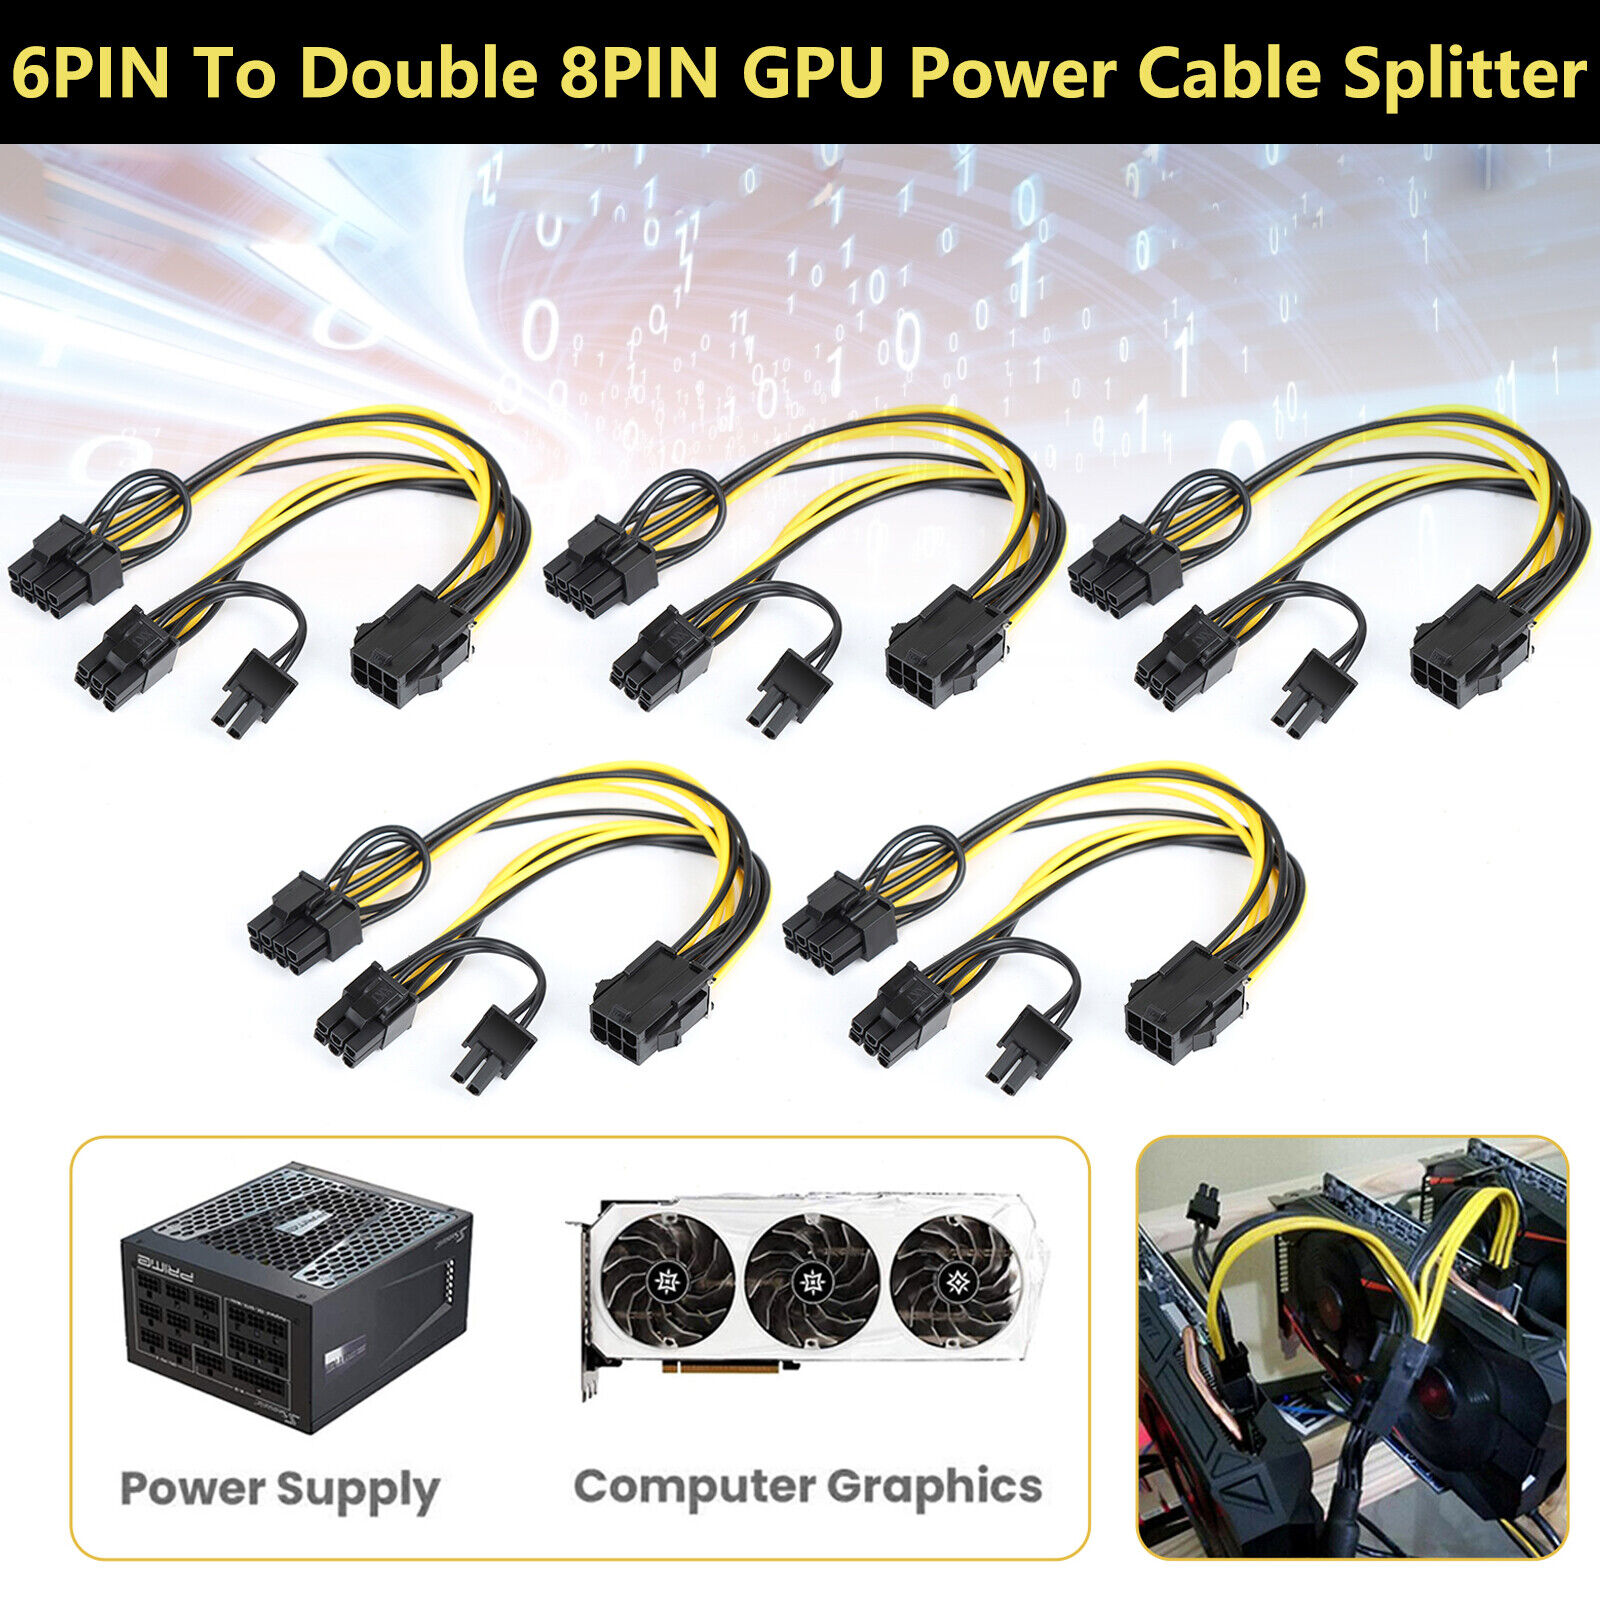 5 PCS 6 pin PCIE Female to Dual PCI-E 6+2 (8) pin Male GPU Power Cable Splitter